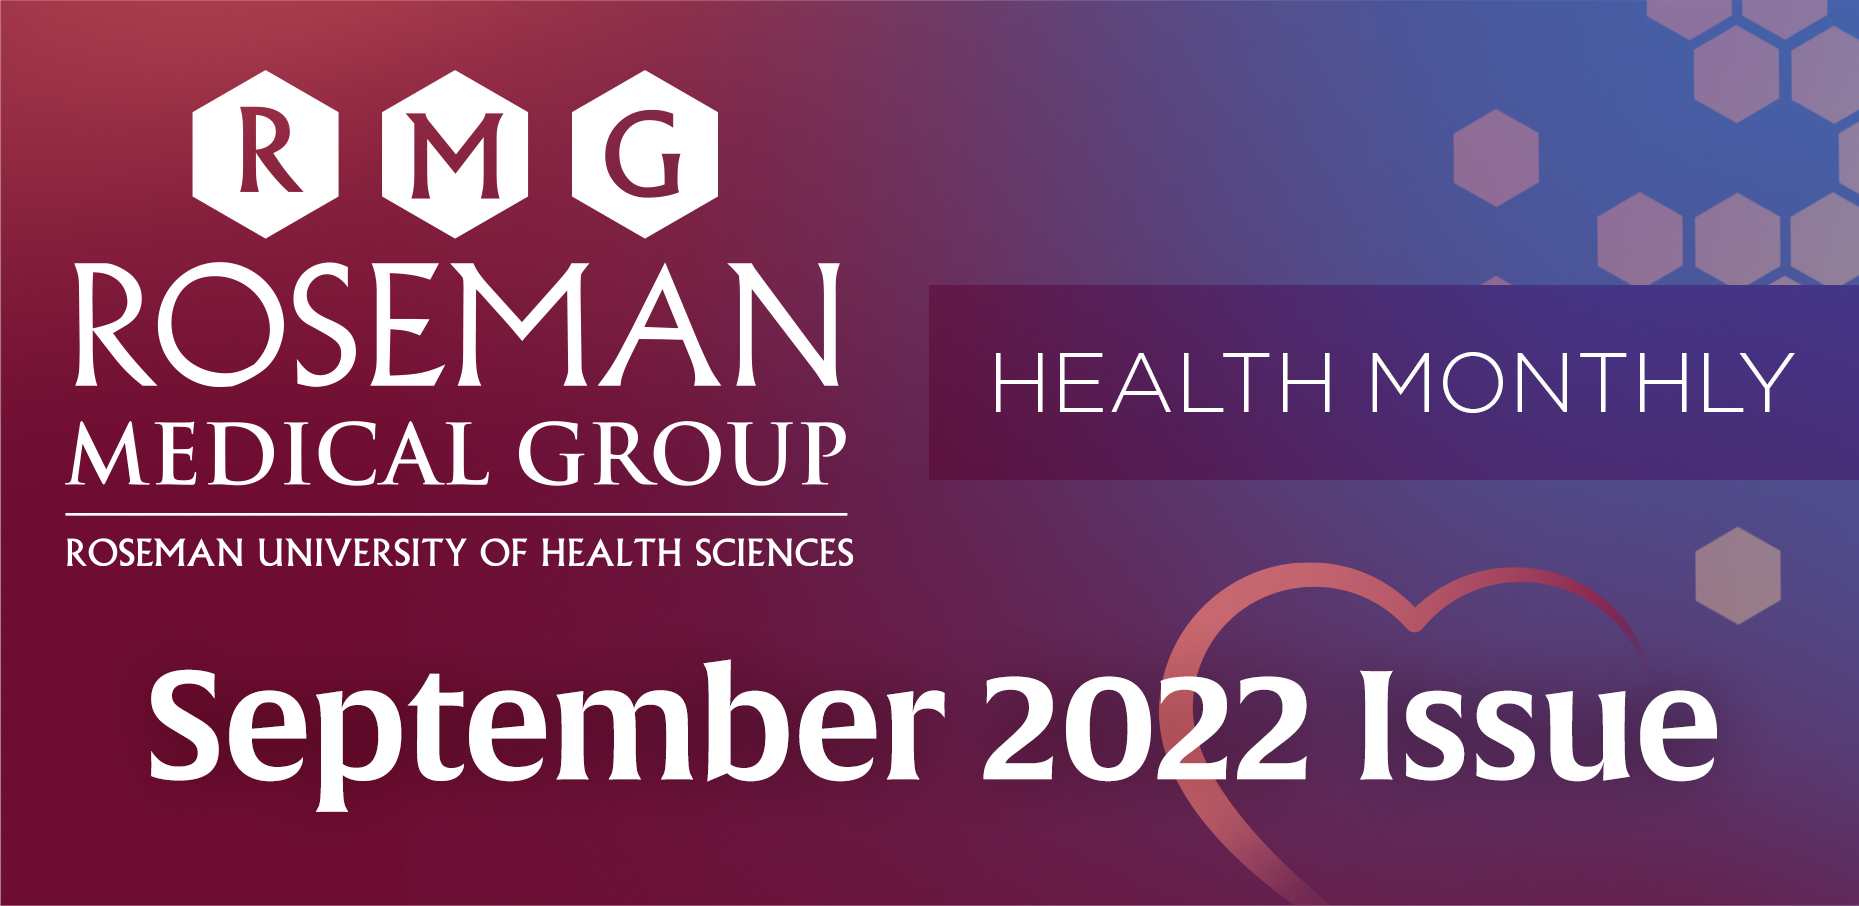 Roseman Medical Group Health Monthly: September 2022 Issue